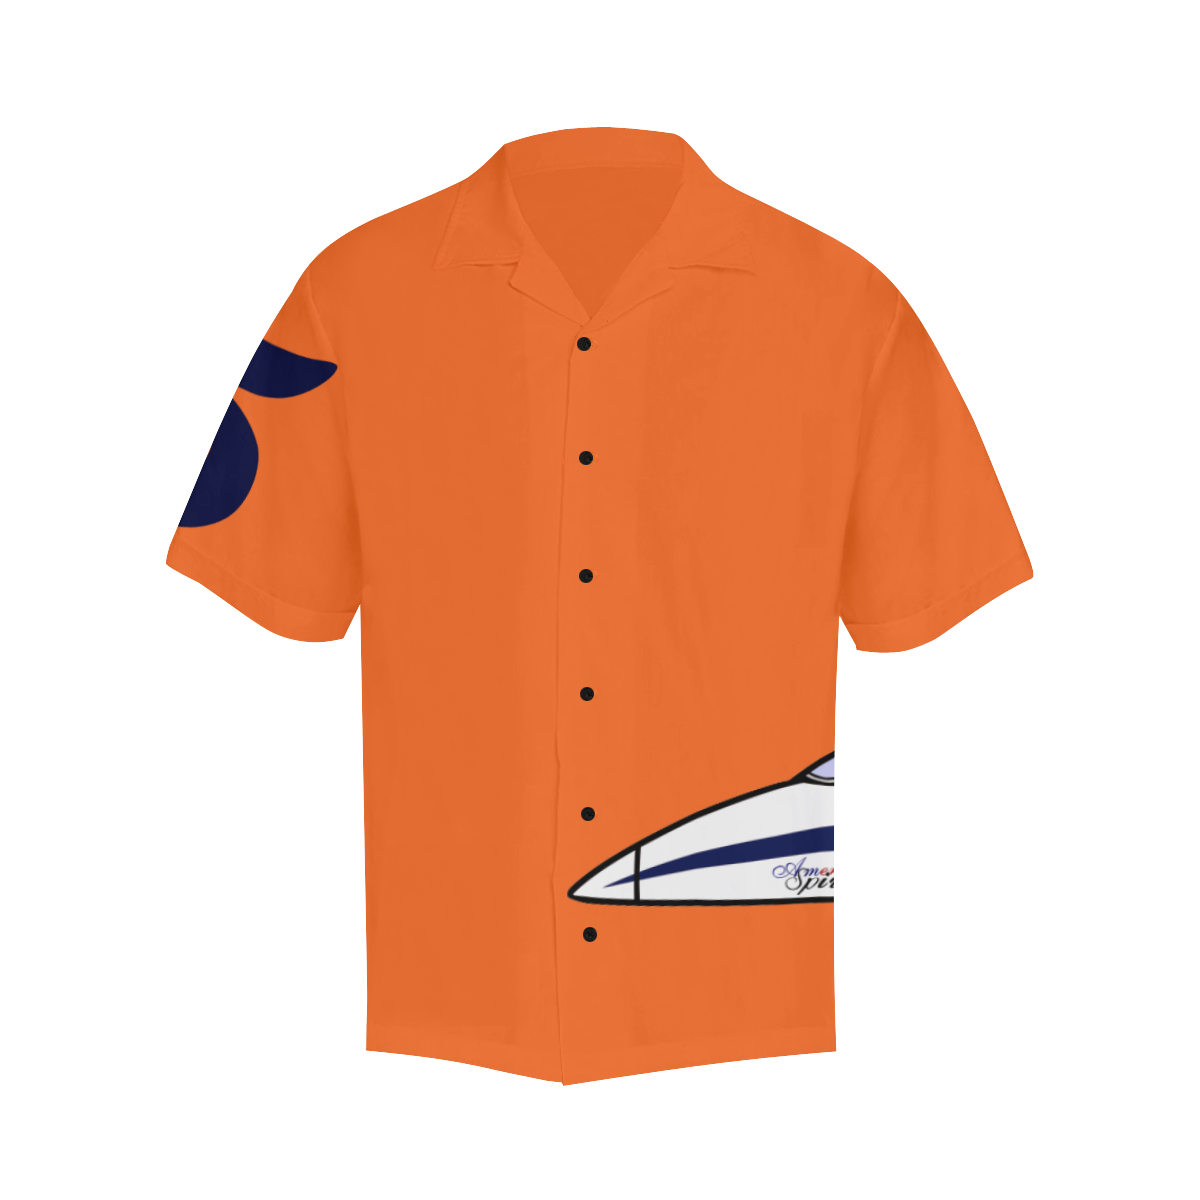 Front image of Orange HAWAIIAN SHIRT. Short sleeved. notch lapel collar and light weight.